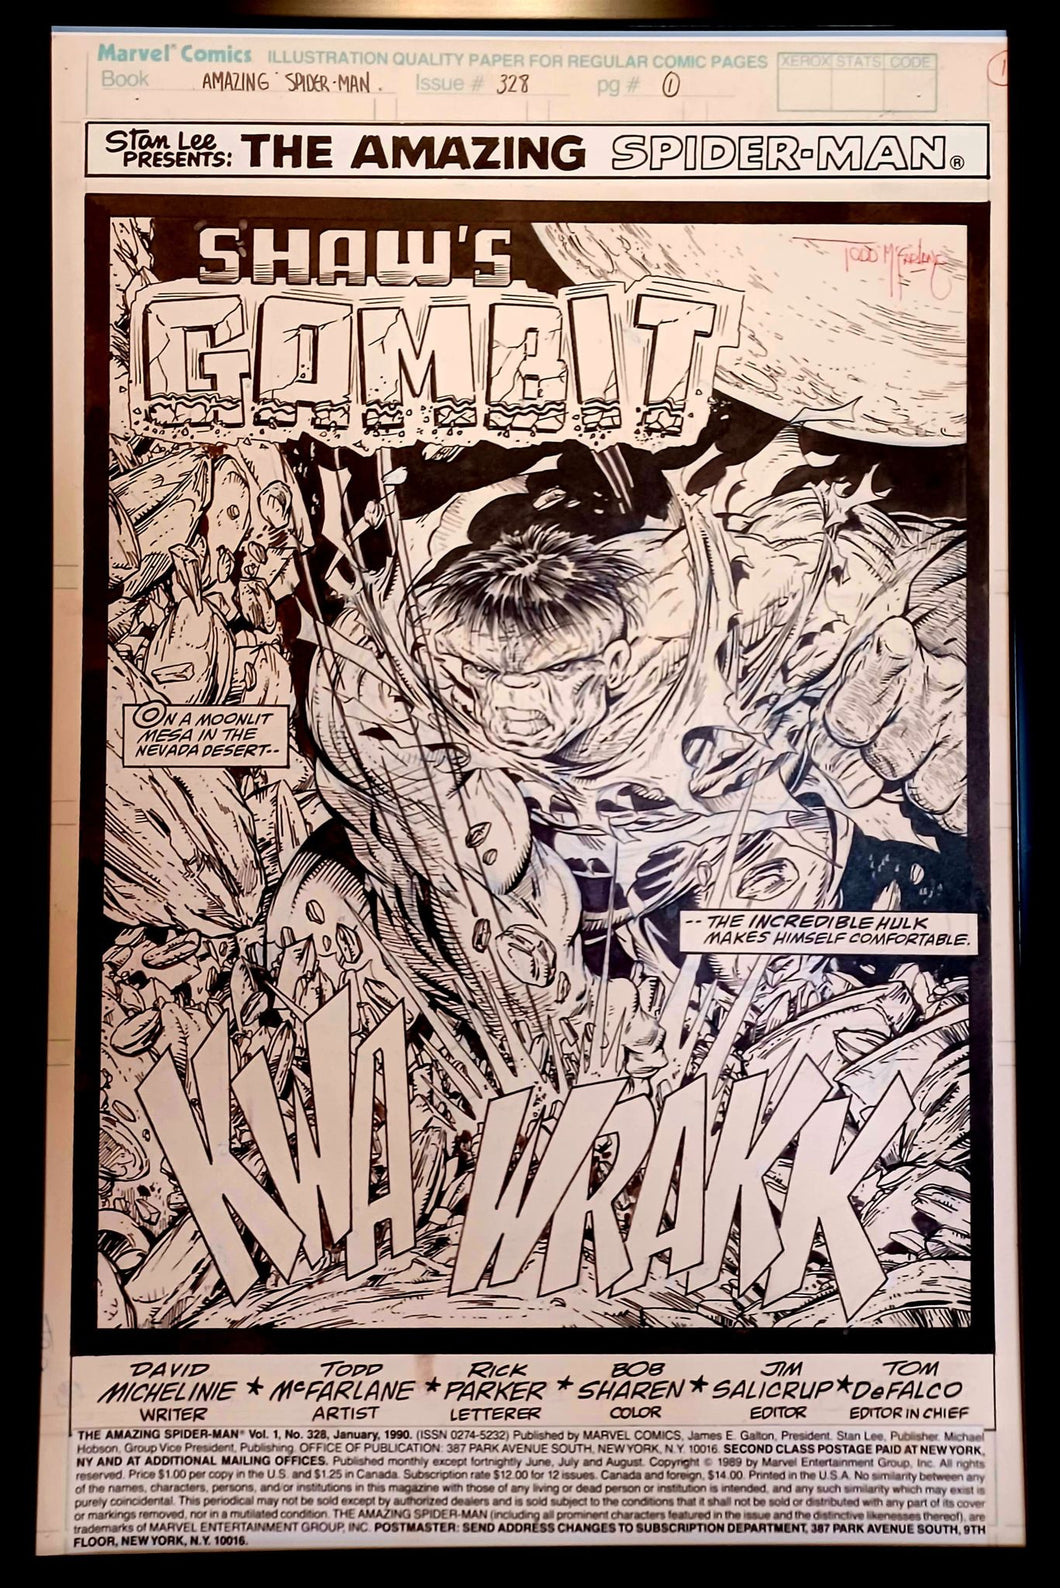 Amazing Spider-Man #328 pg. 1 by Todd McFarlane 11x17 FRAMED Original Art Print Comic Poster